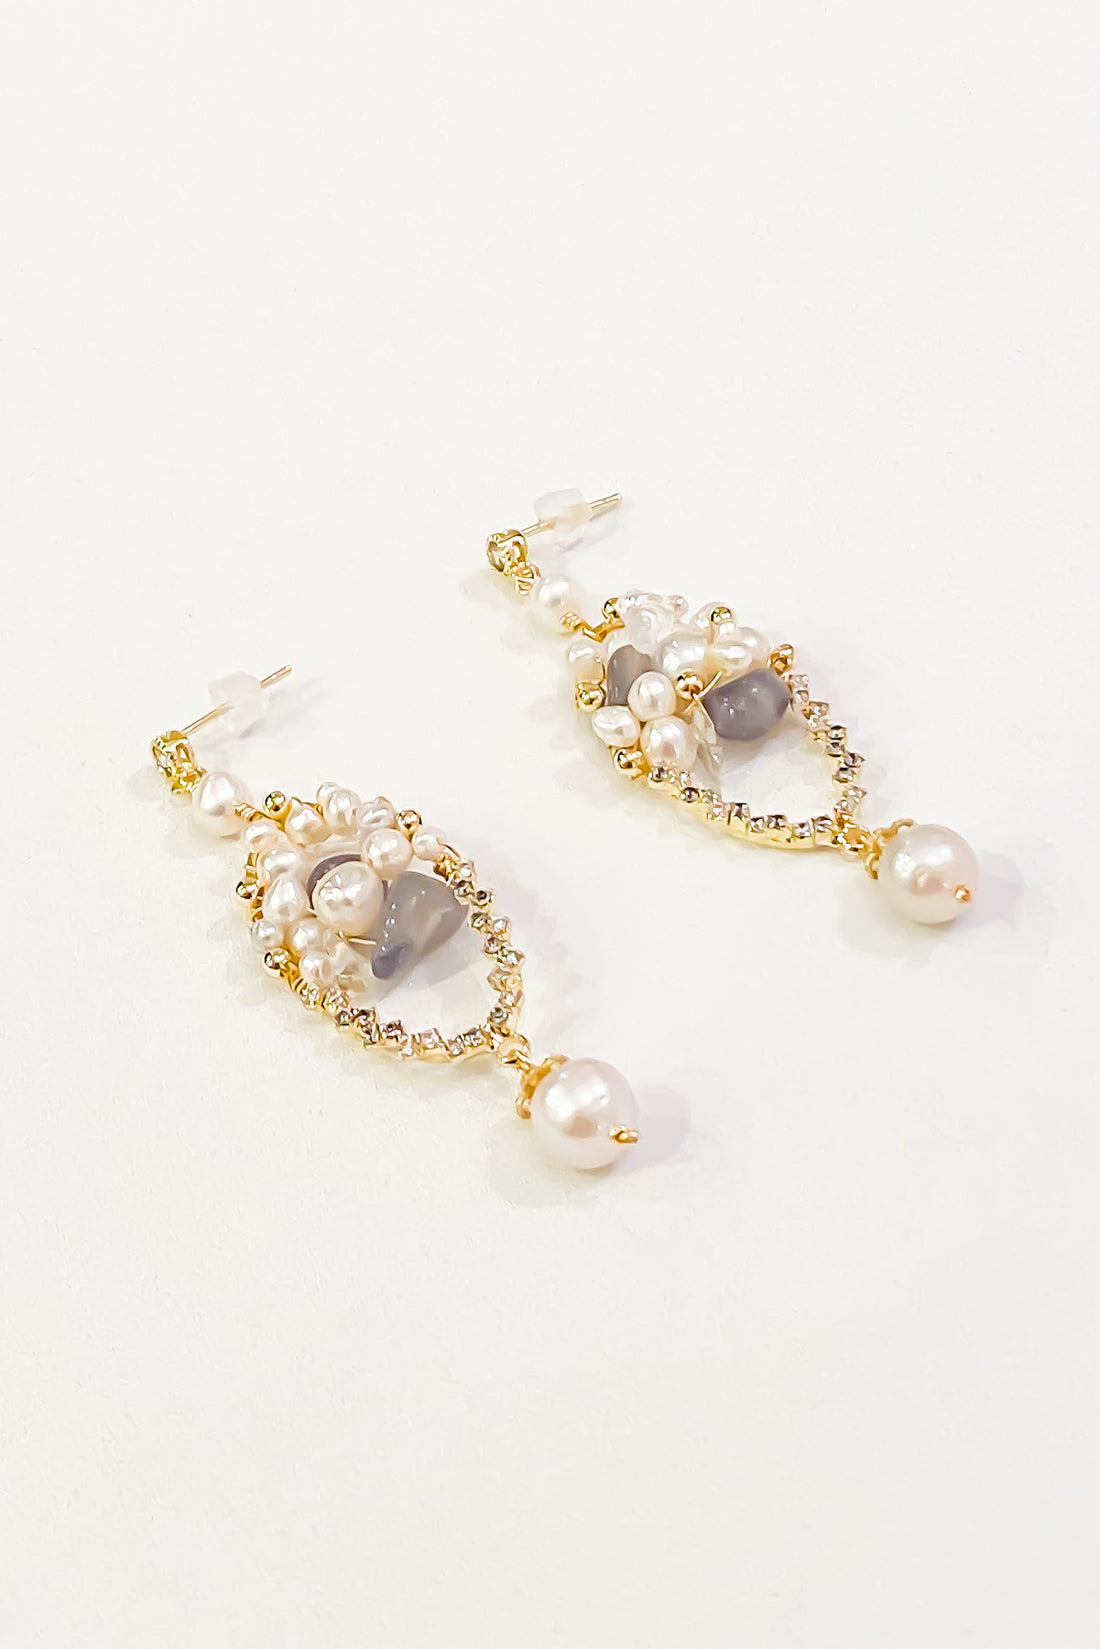 SKYE San Francisco Shop SF Chic Modern Elegant Classy Women Jewelry French Parisian Minimalist Marquis 18K Gold Crystal Pearl Earrings